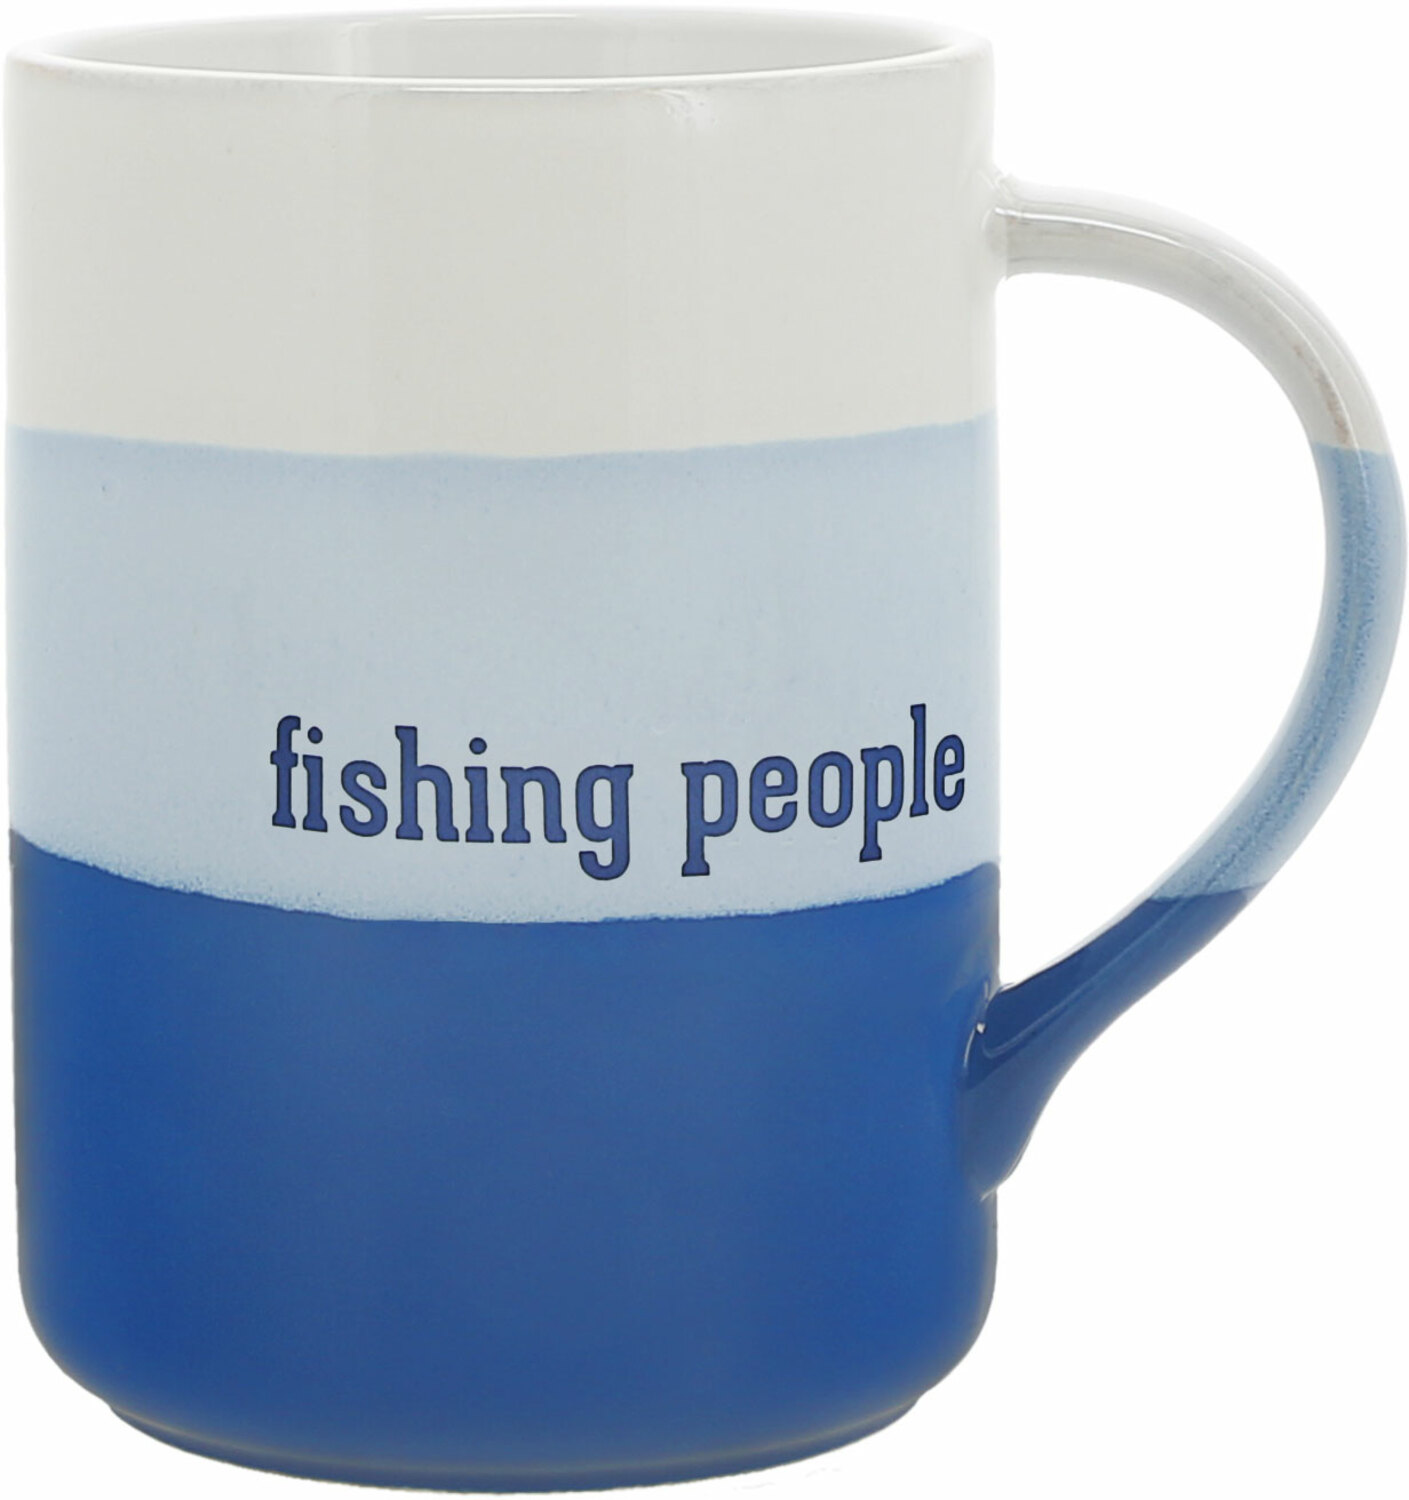 Fishing People by We People - Fishing People - 18 oz Mug